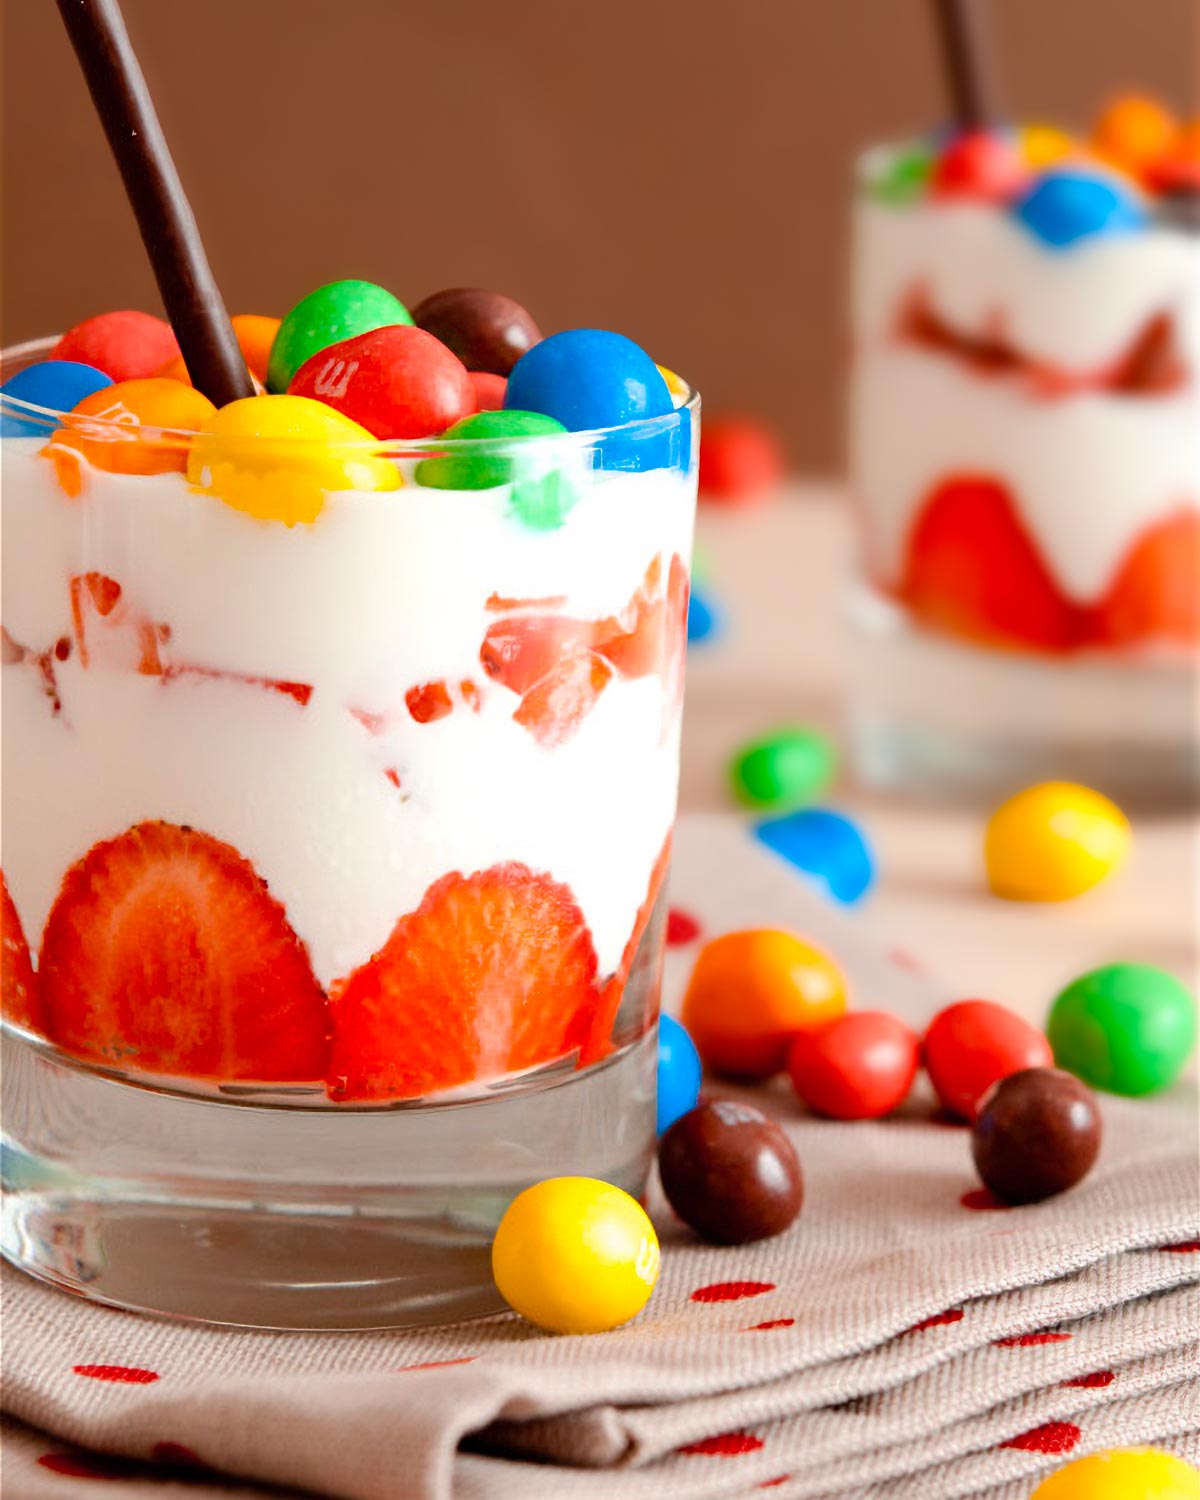 strawberry dessert with yogurt and chocolate